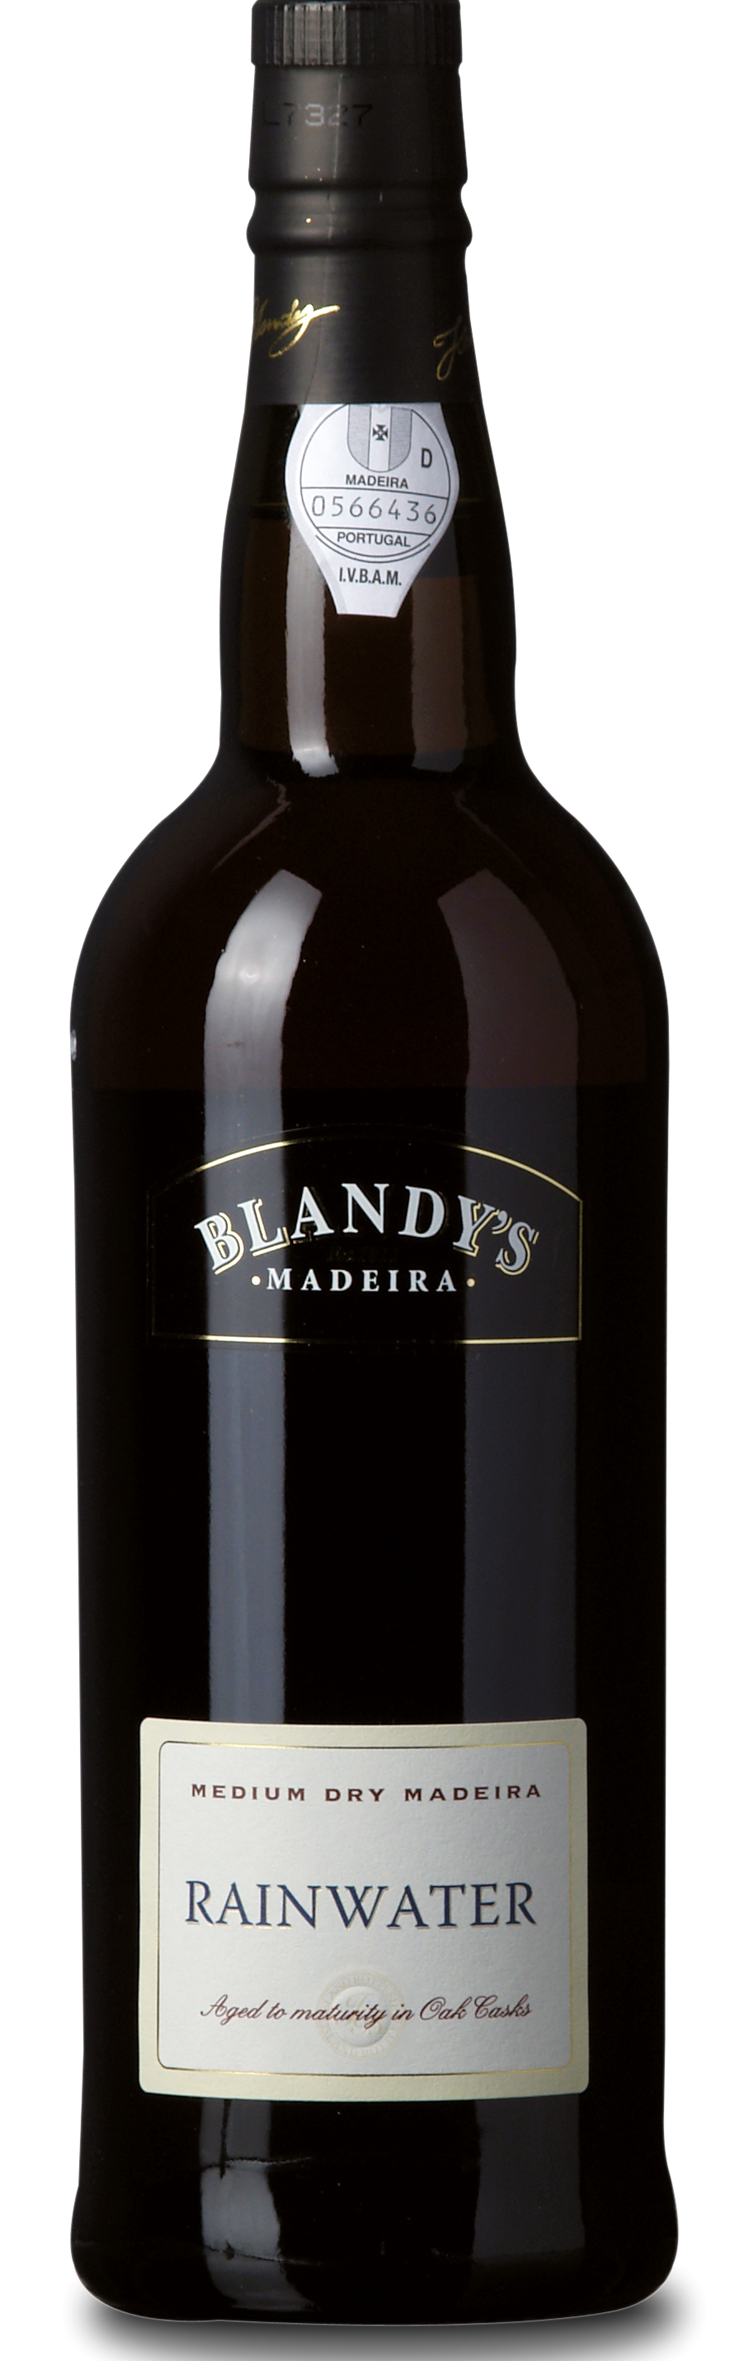 Blandy's Fine Rainwater Madeira